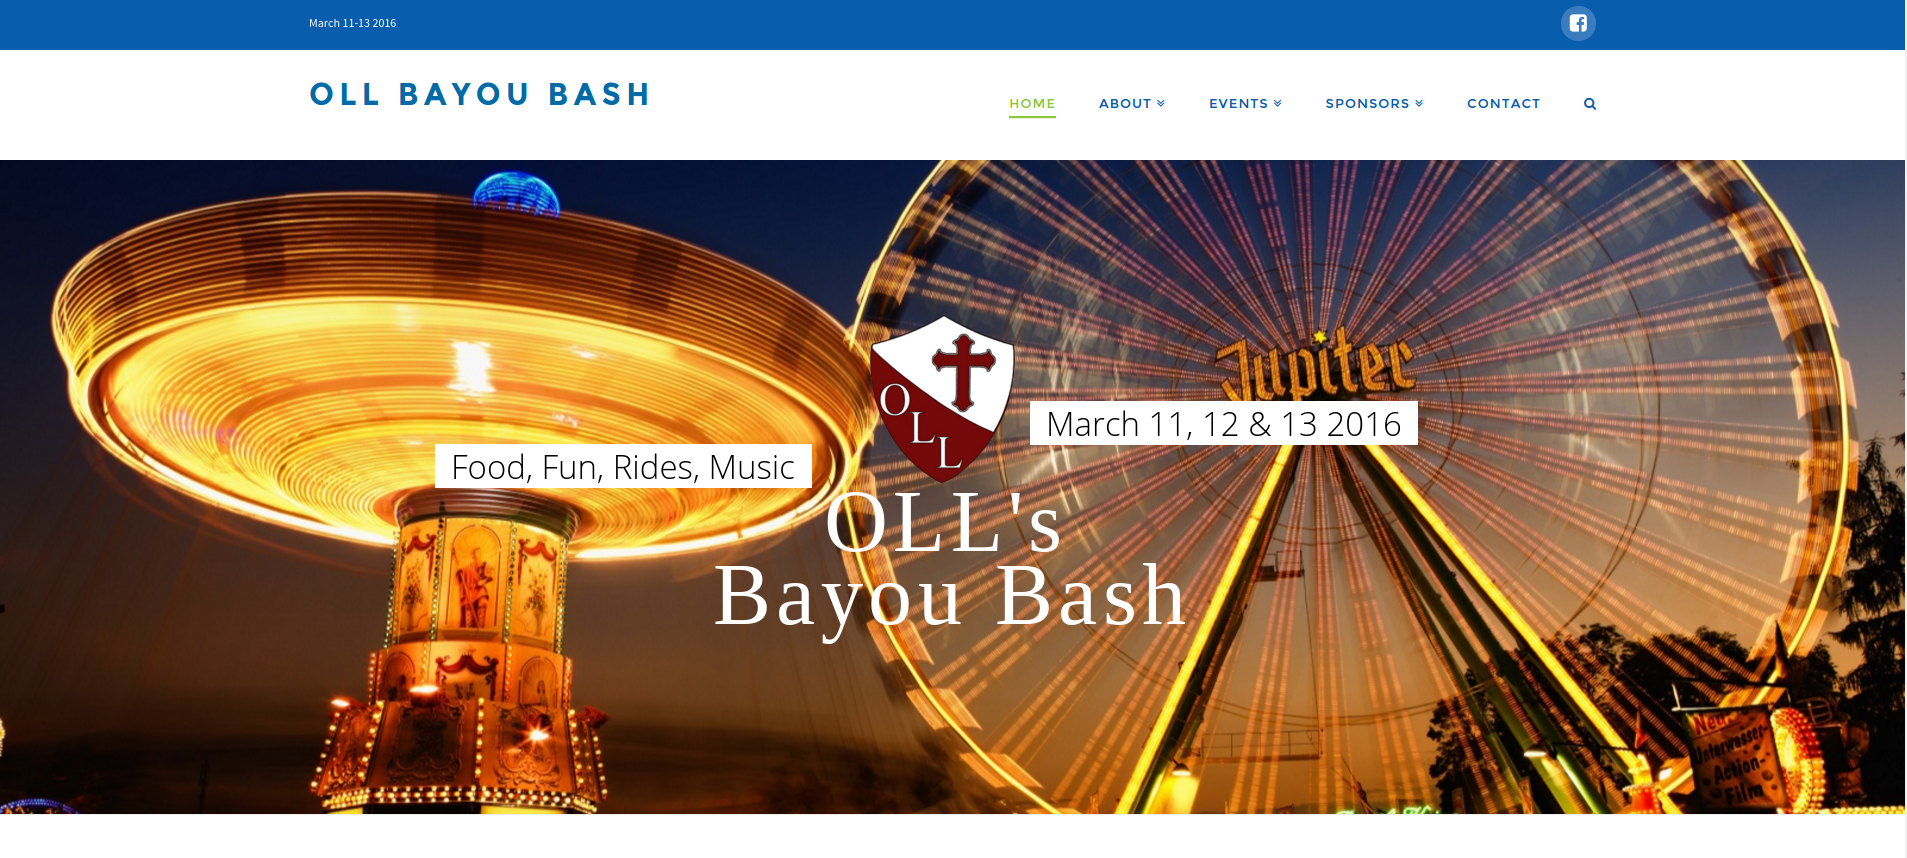 bayou bash website